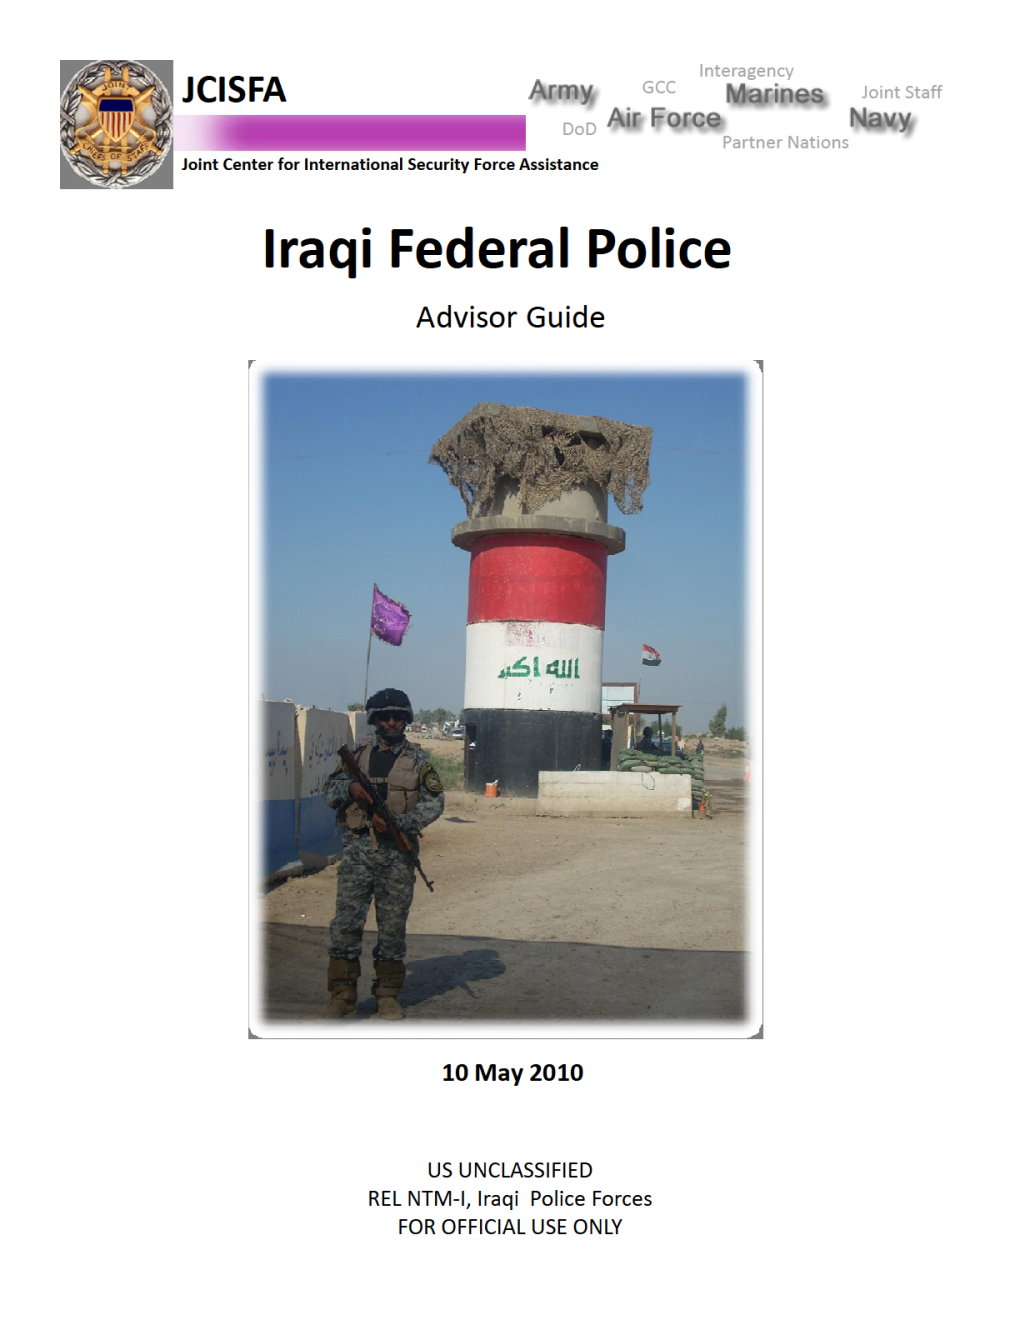 JCISFA-Iraqipolice